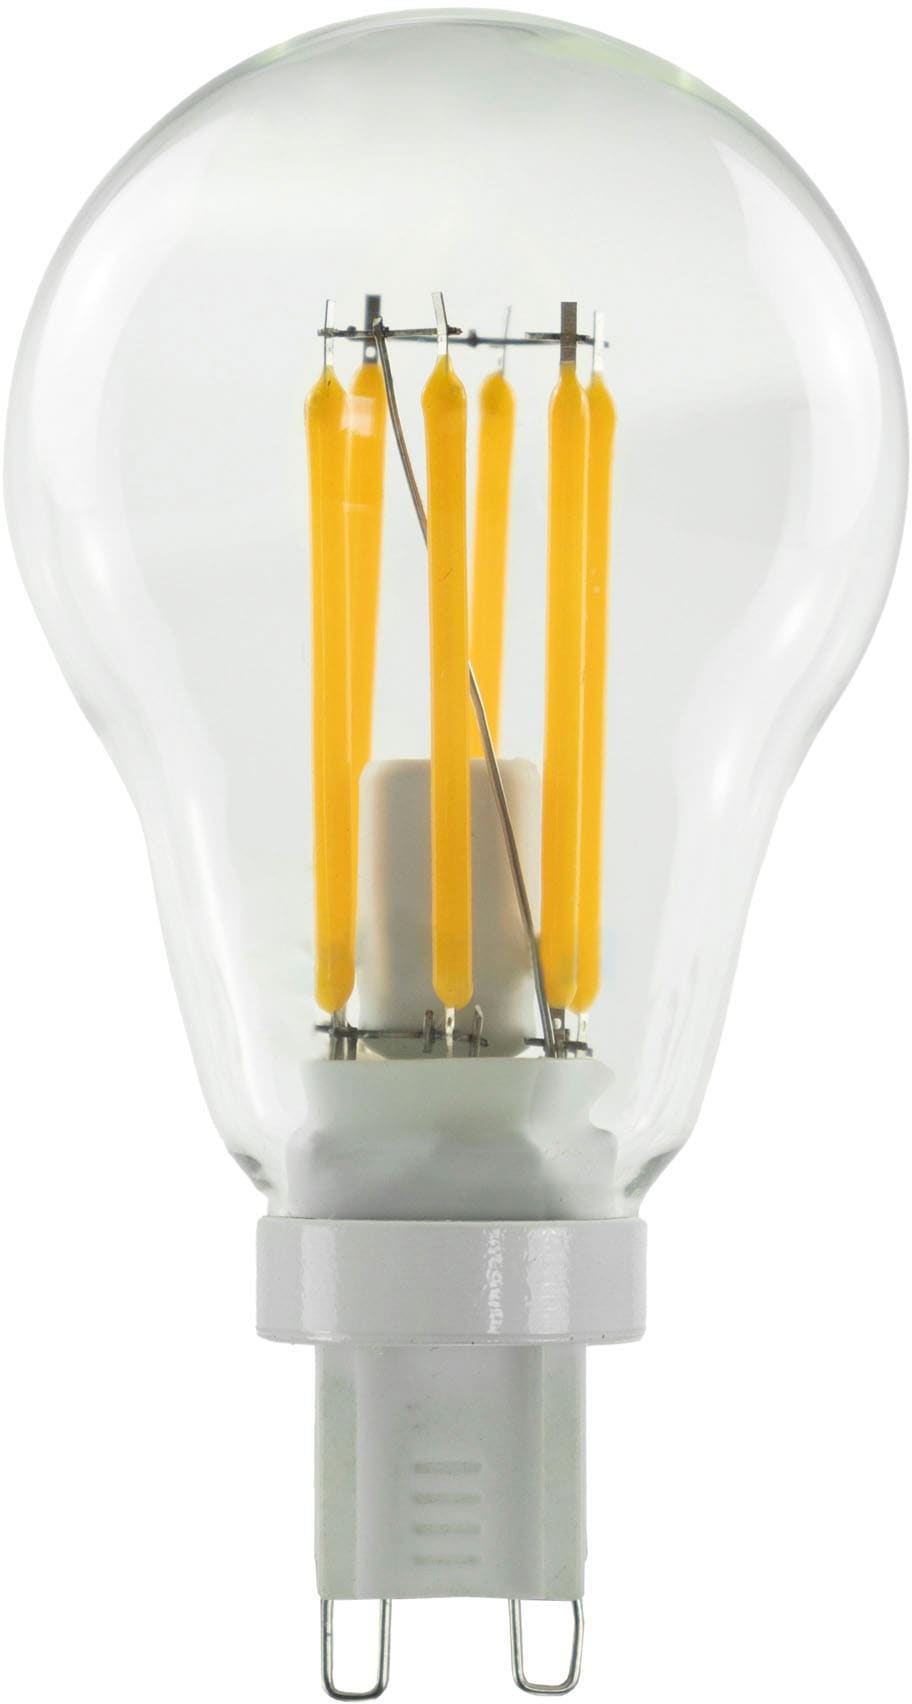 SEGULA LED-Leuchtmittel »LED Glühlampe A15 - G9«, G9, 1 St., Warmweiß, LED Glühlampe A15 - G9, 2700K, klar, 3,2W, CRI 90, dimmbar